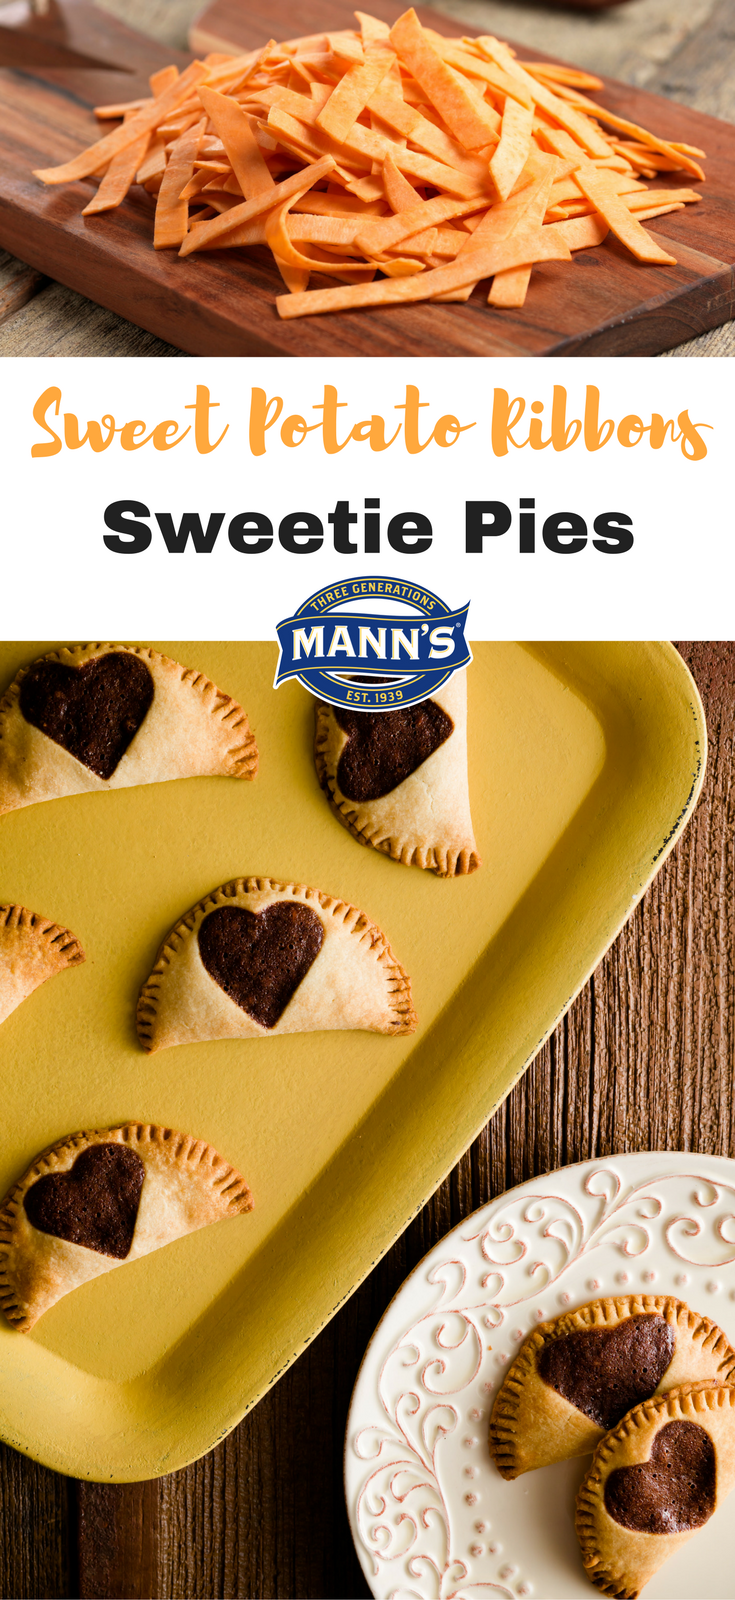 Sweet Potato Ribbons Sweetie Pies | Mann's Fresh Vegetables